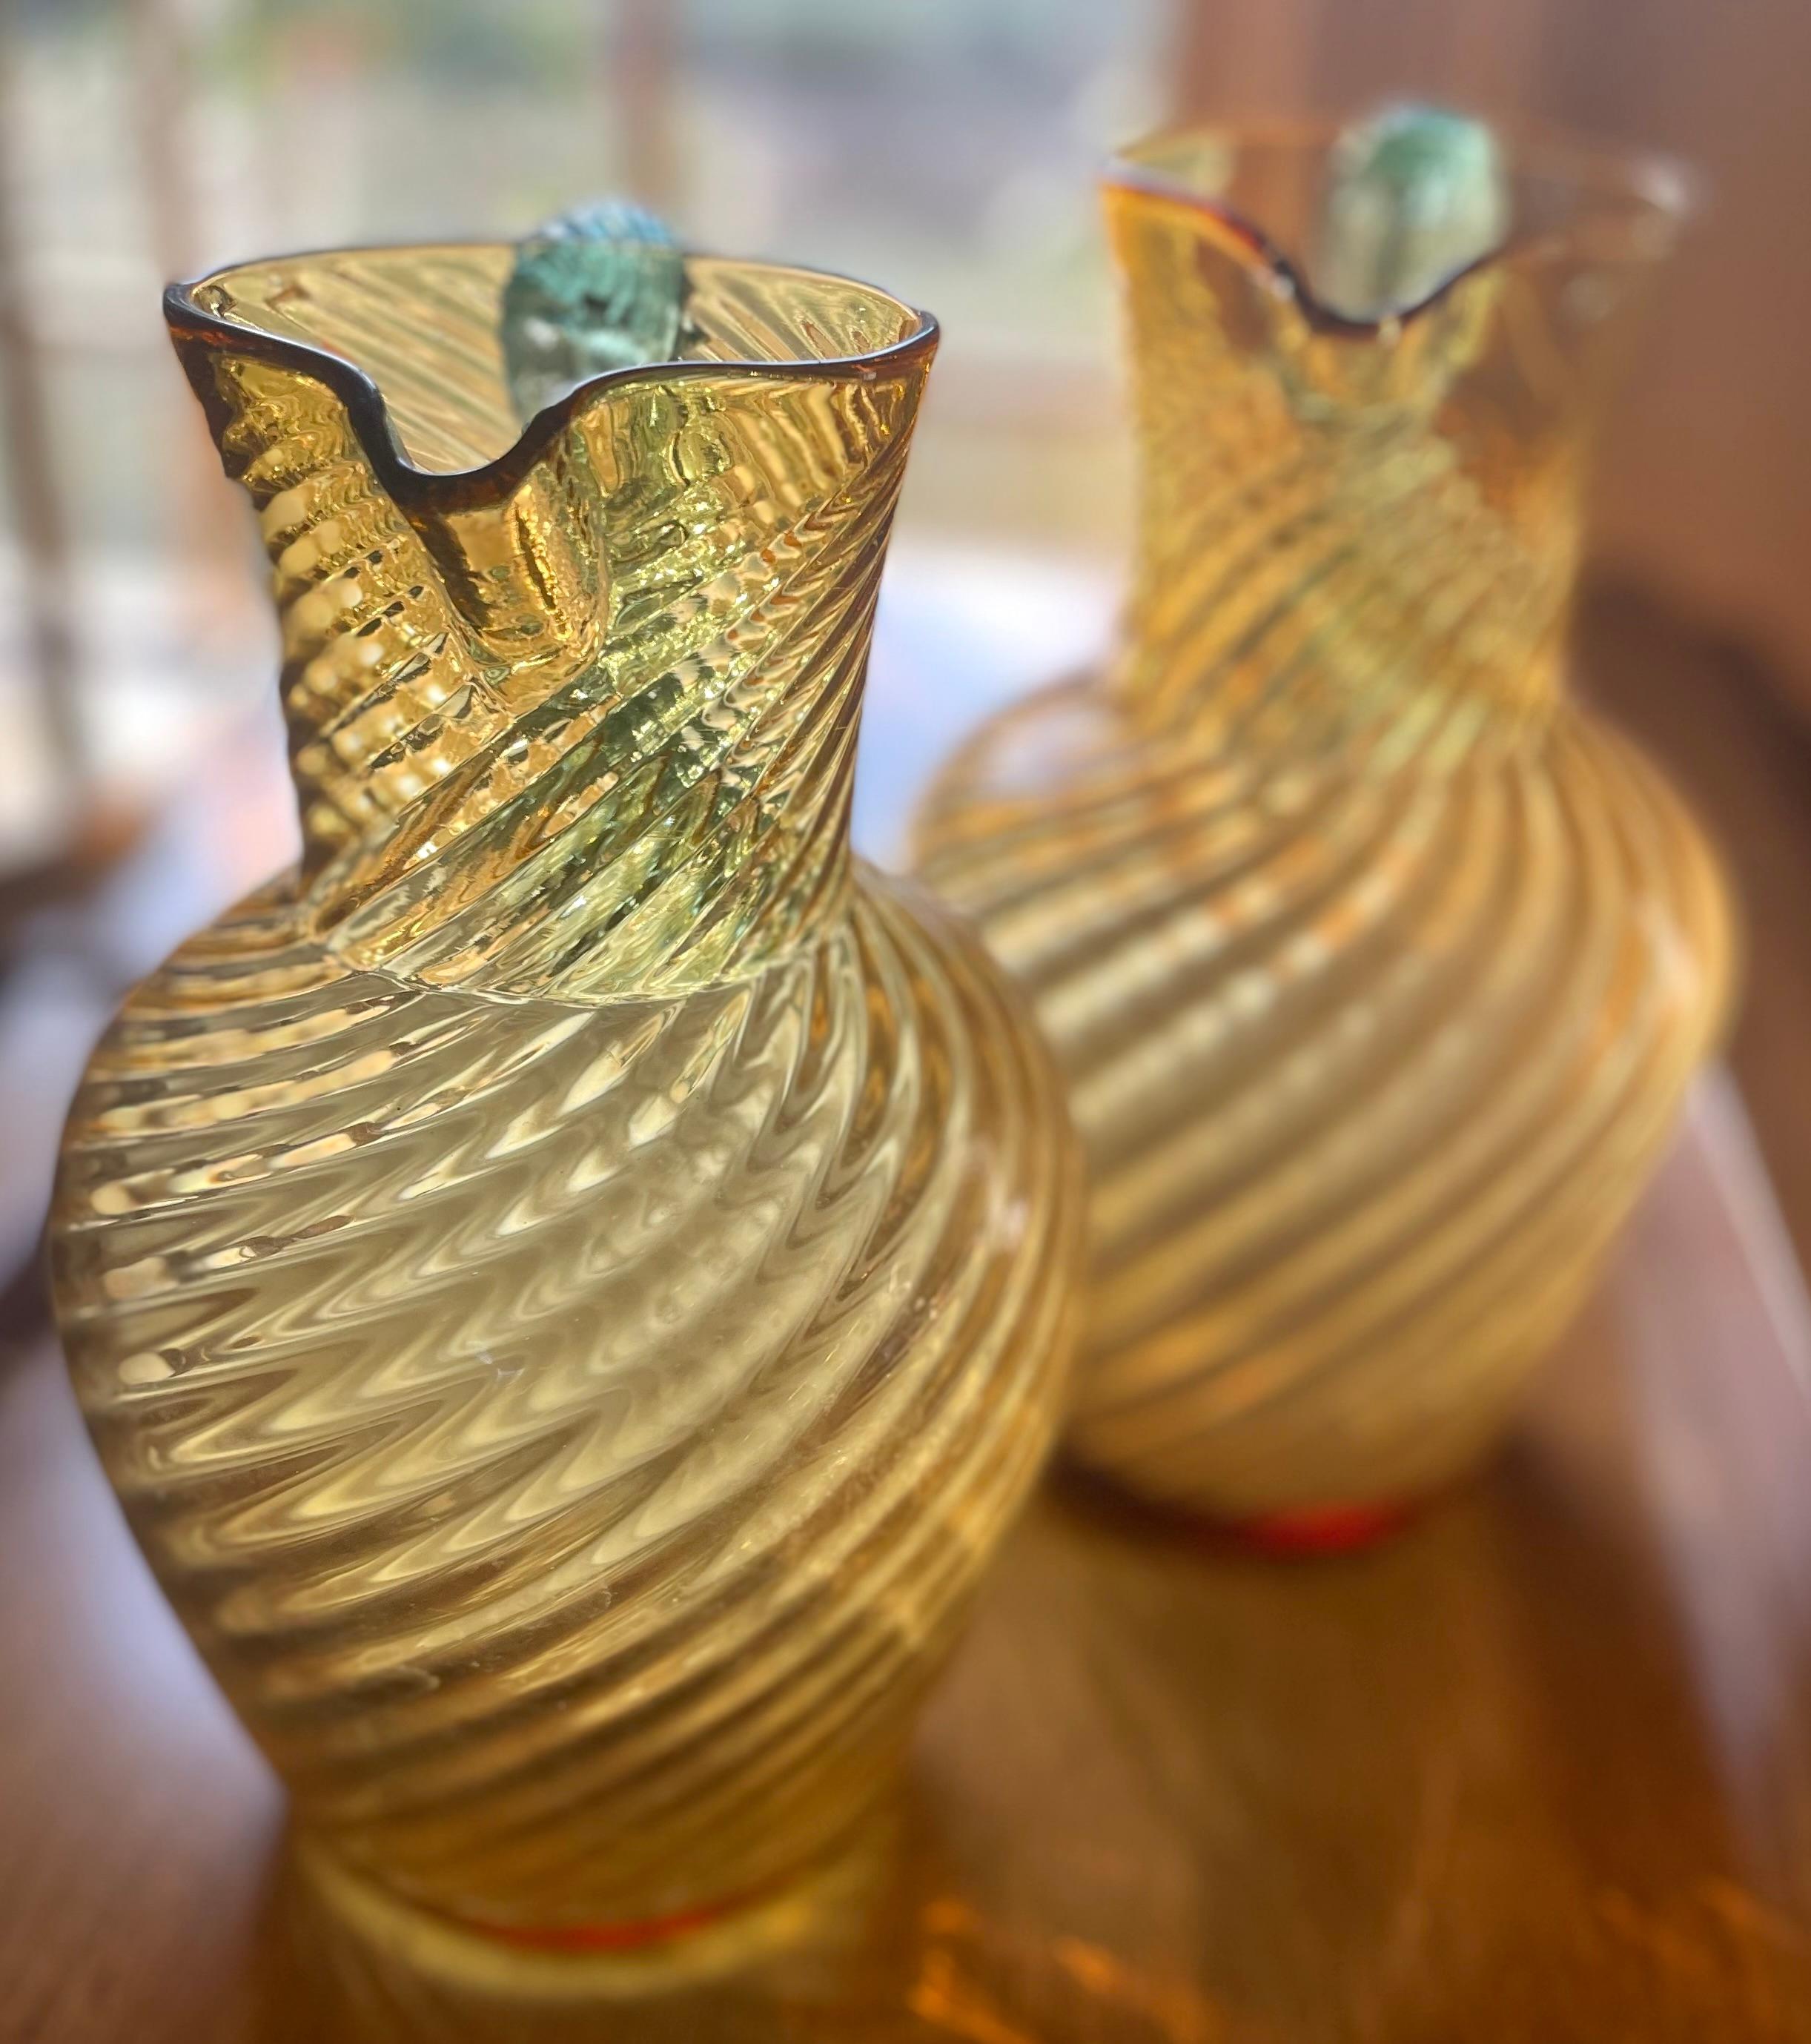 Pair Murano aquamarine and gold Pitchers. Swirled yellow gold Venetian glass with braided aquamarine handle pitchers. Italy, c. 1880's
Dimensions: 9” H x 5” diameter body; 4” diameter at base